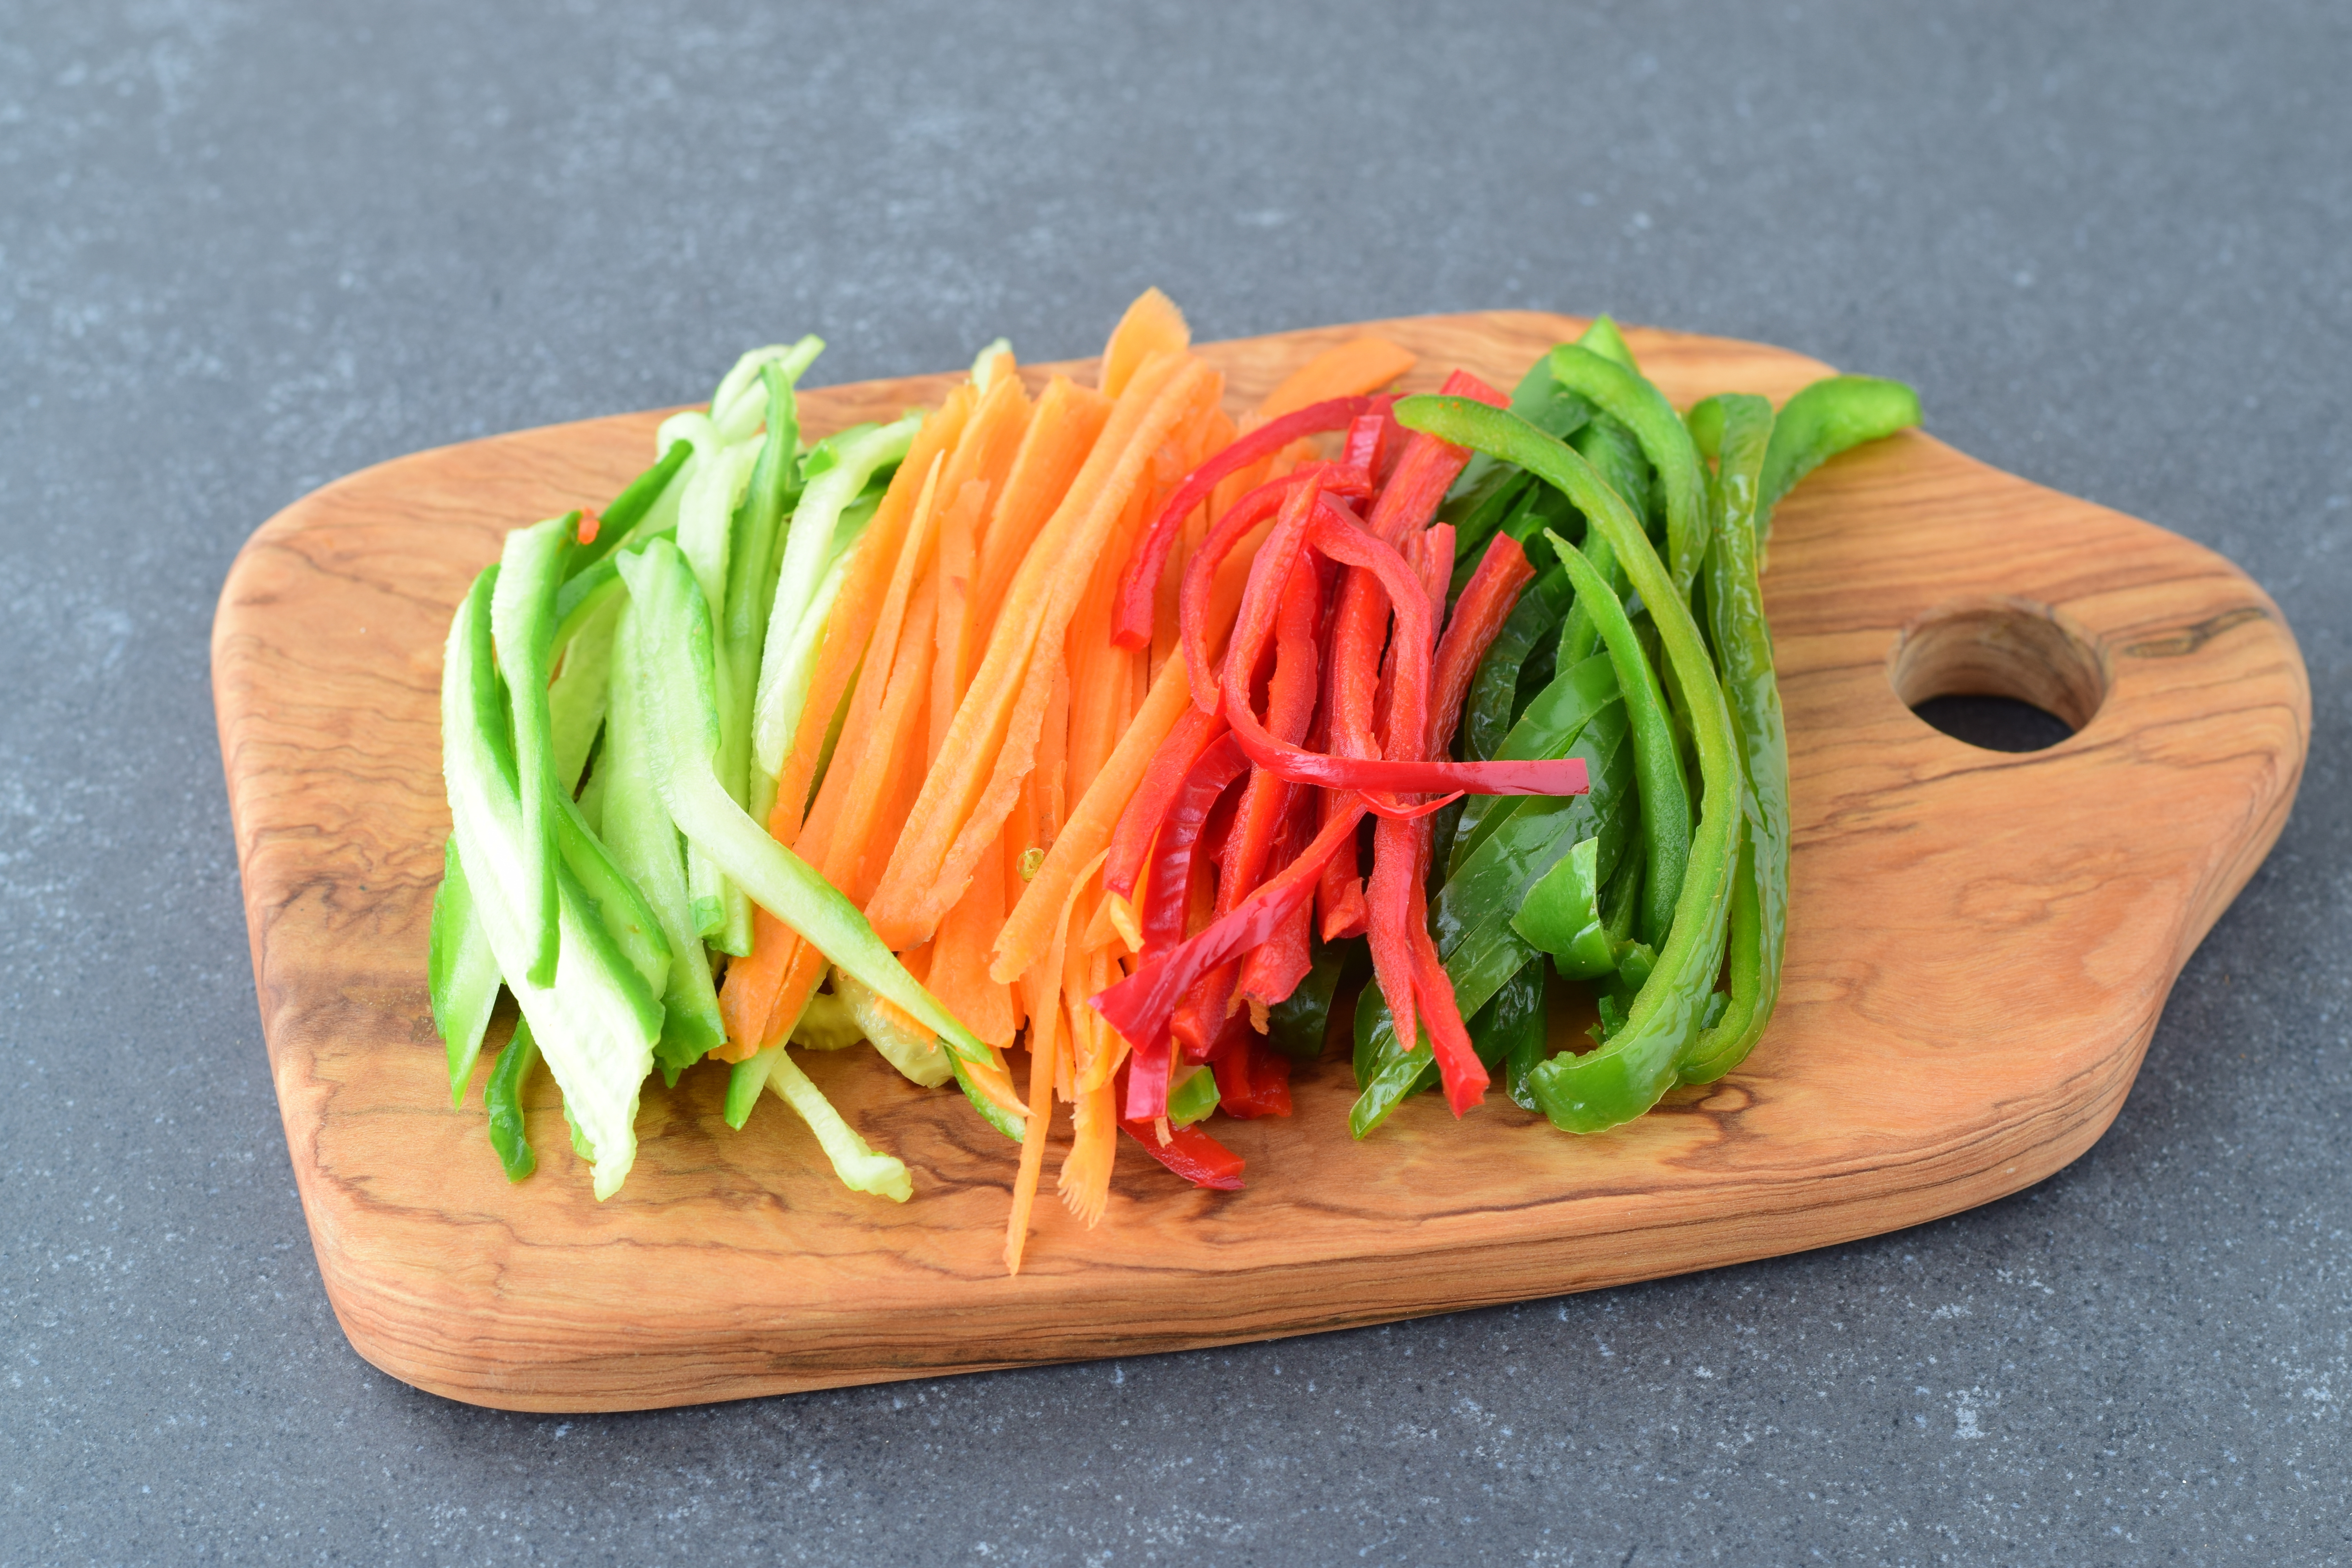 Julienne your vegetables. | Source: Shutterstock